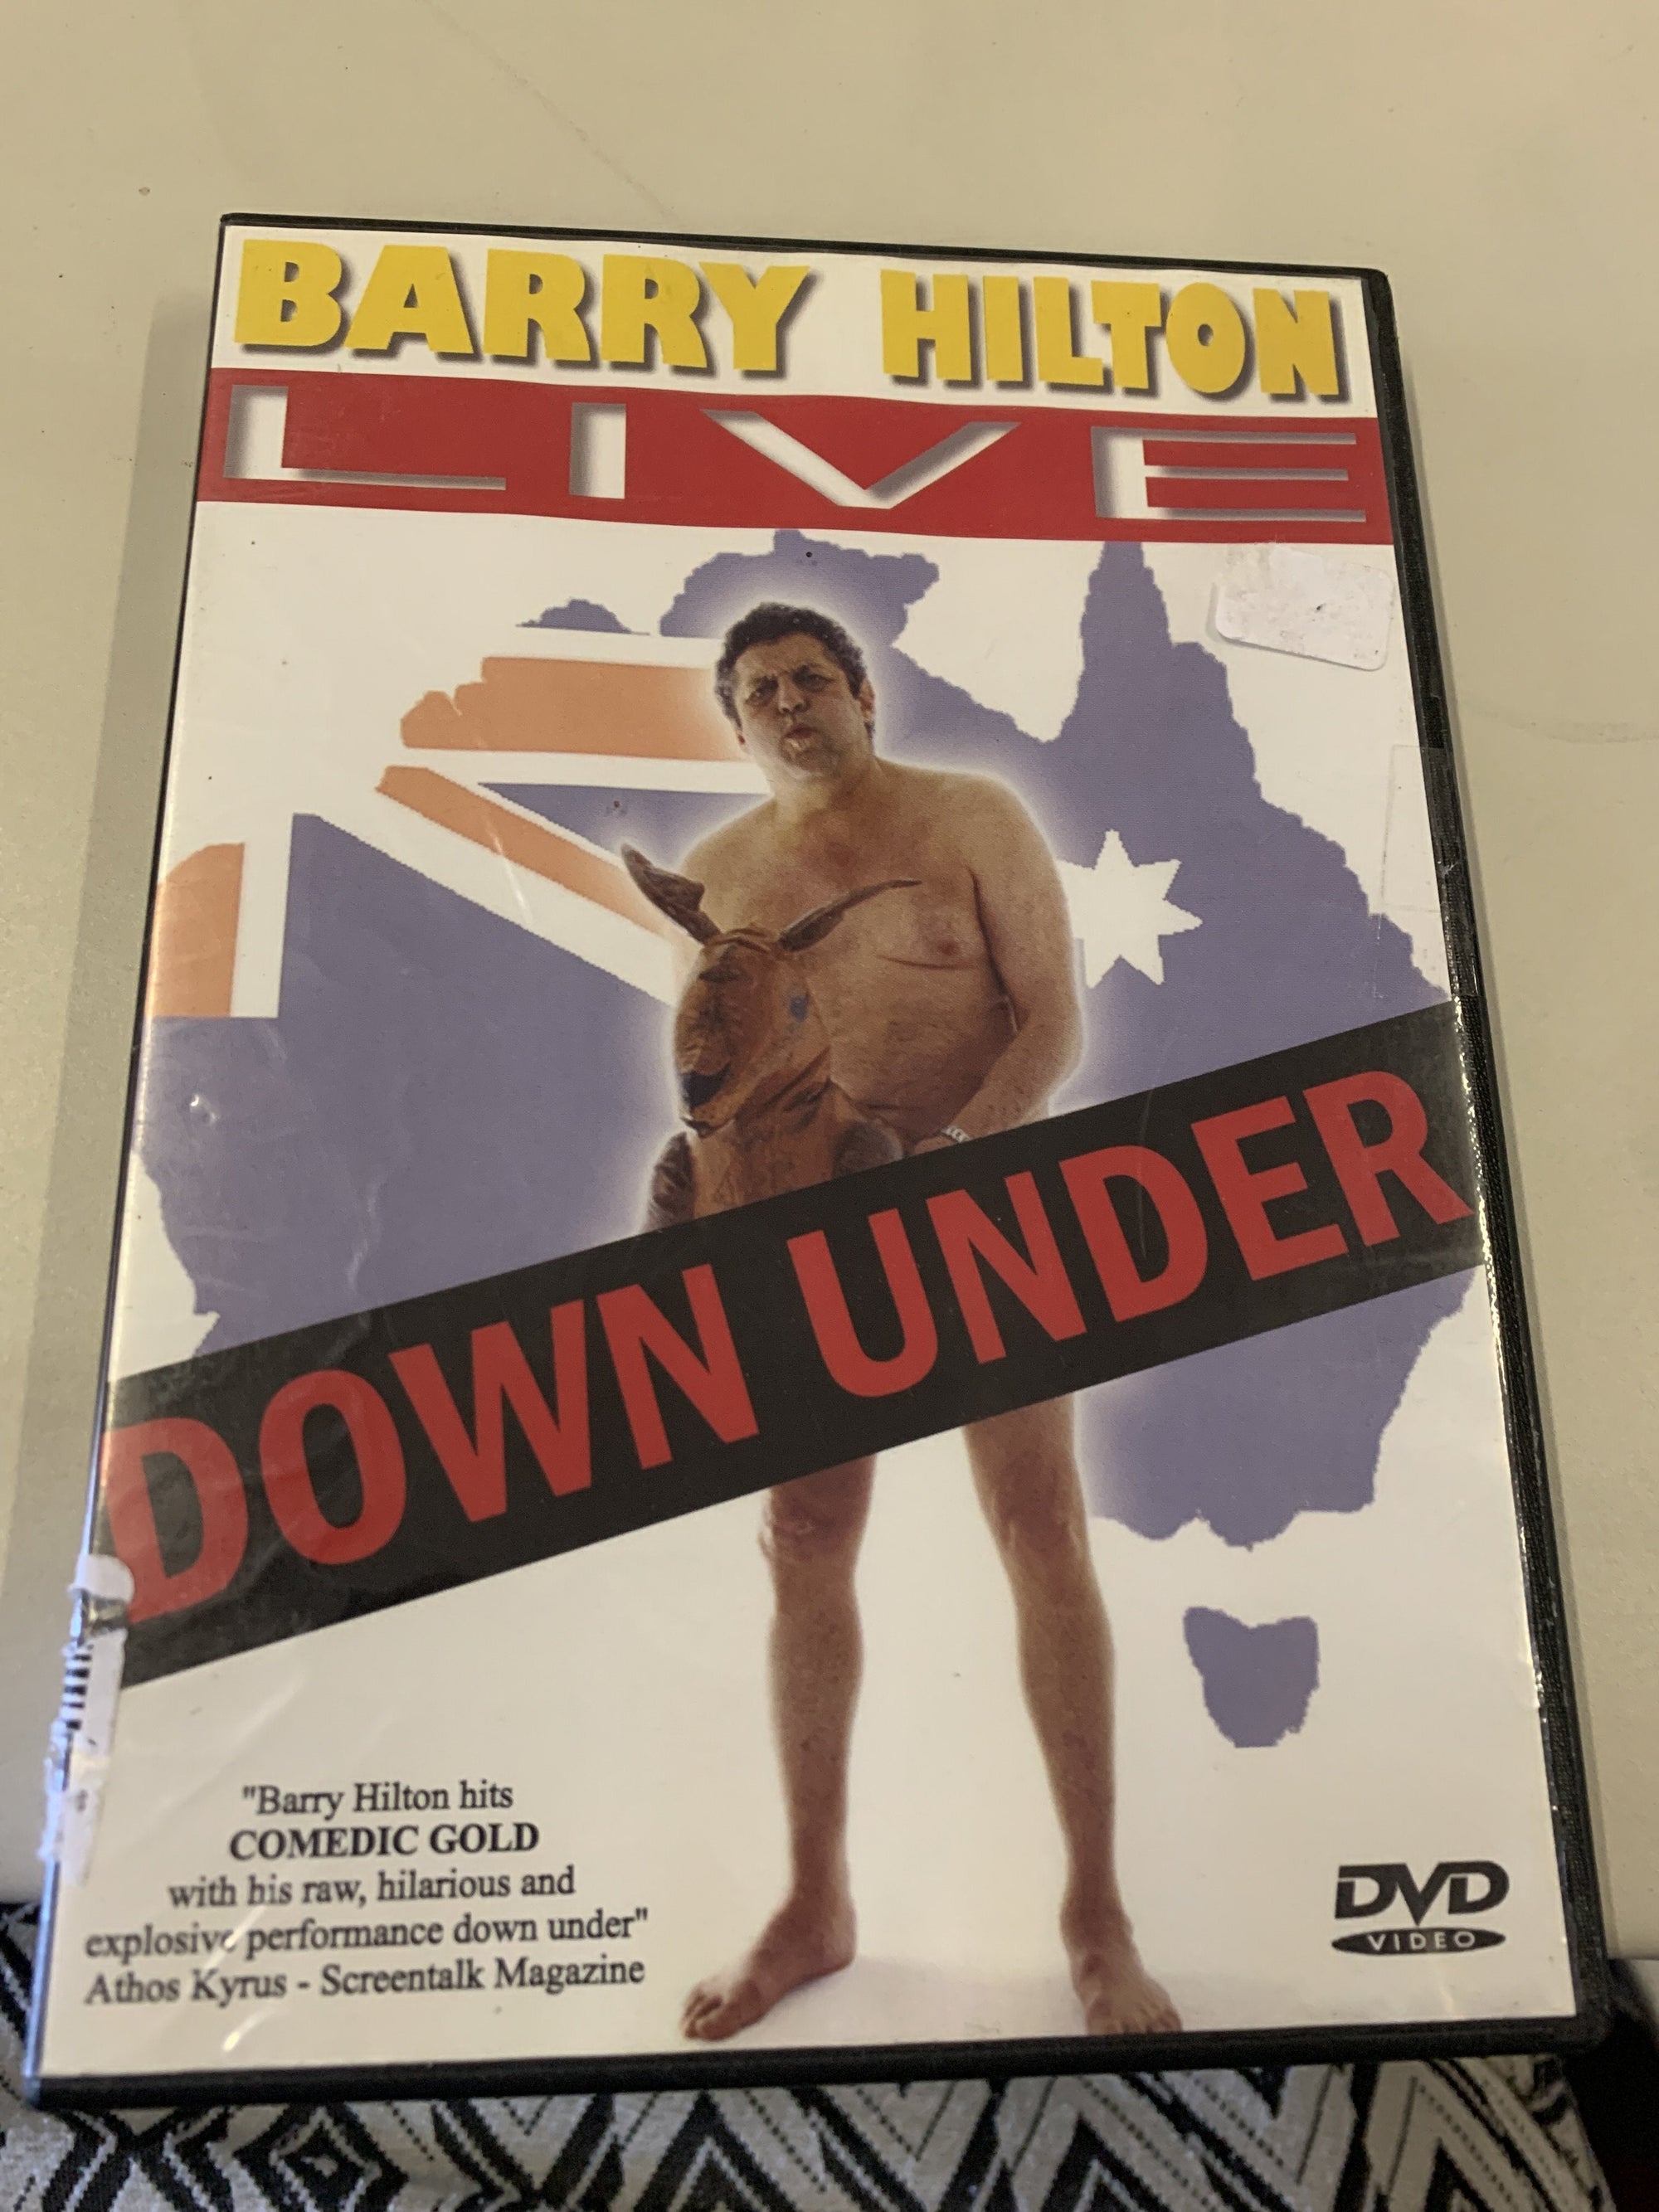 Down Under-DVD - 2ndhandwarehouse.com